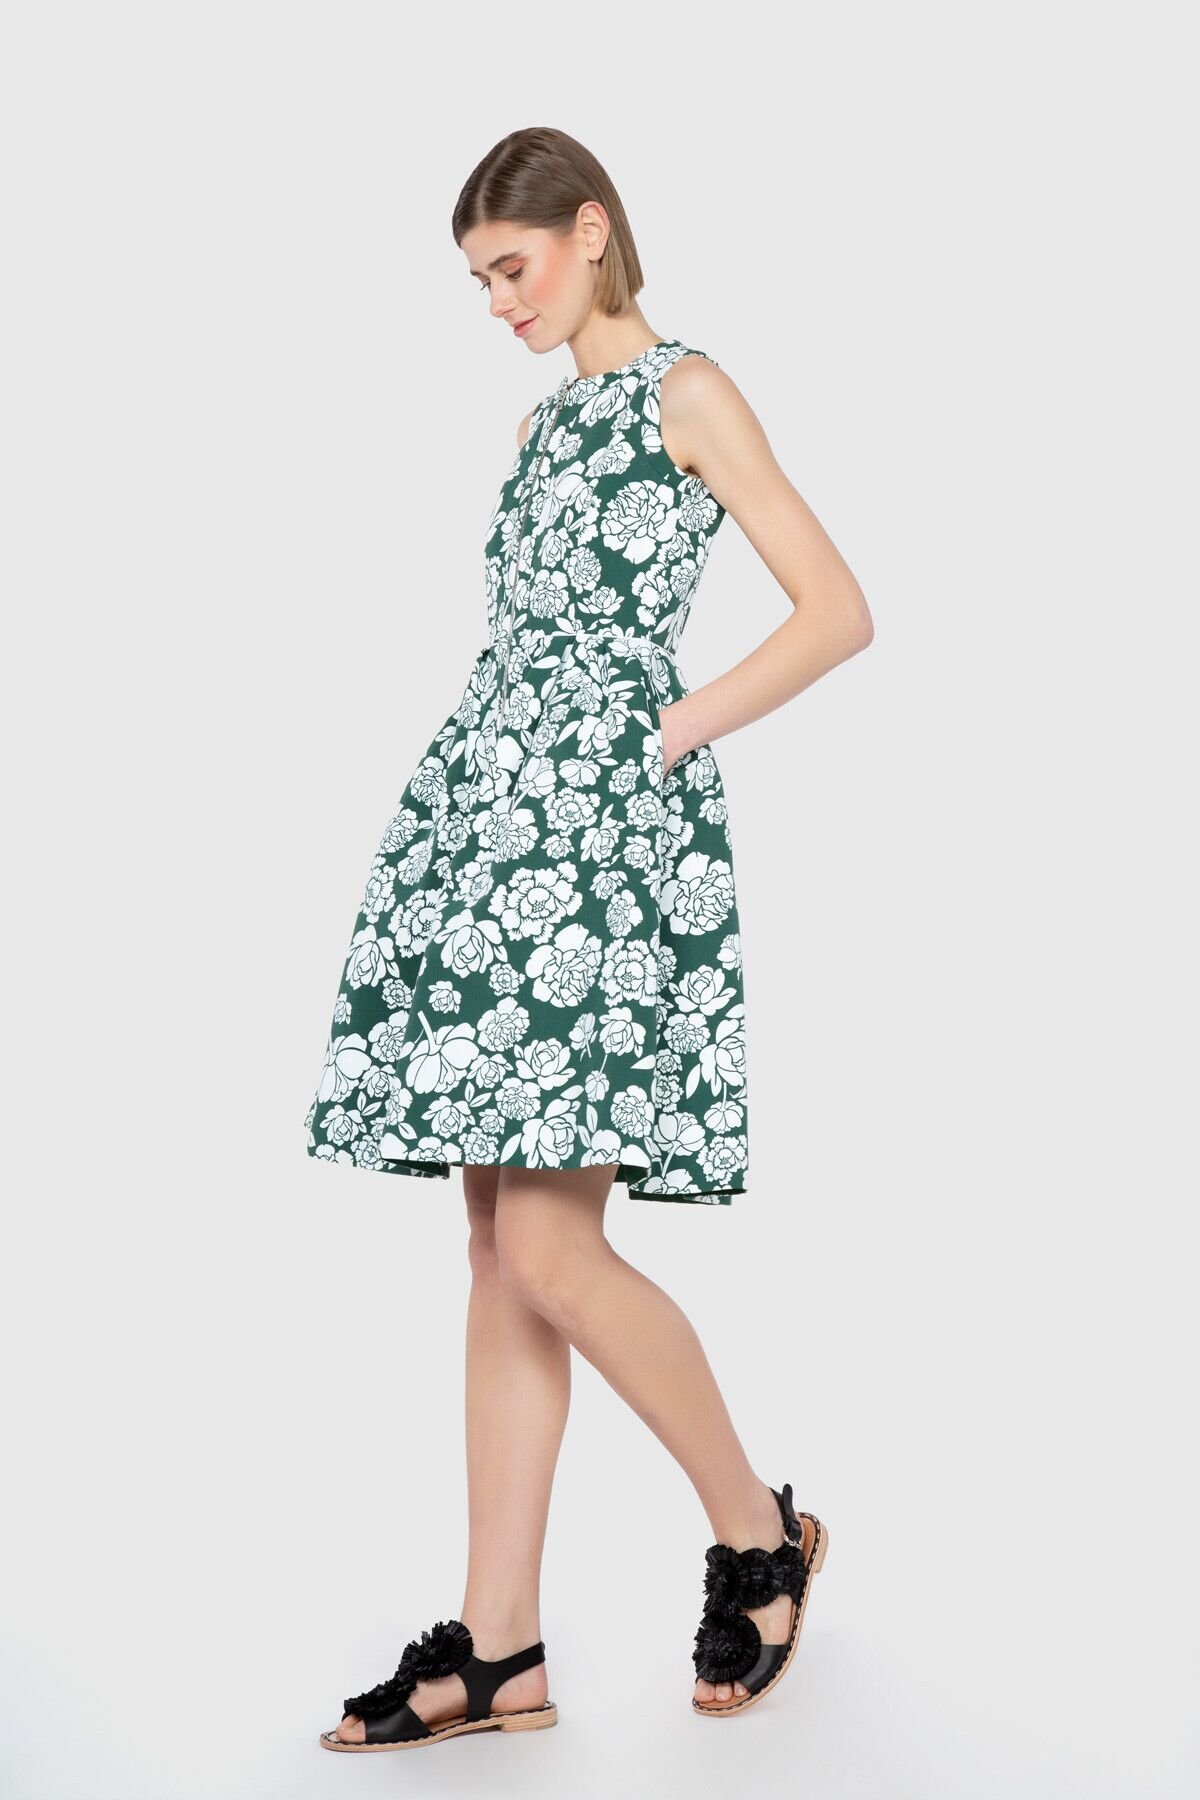 Floral Patterned Voluminous Skirt Form Above Knee Dress